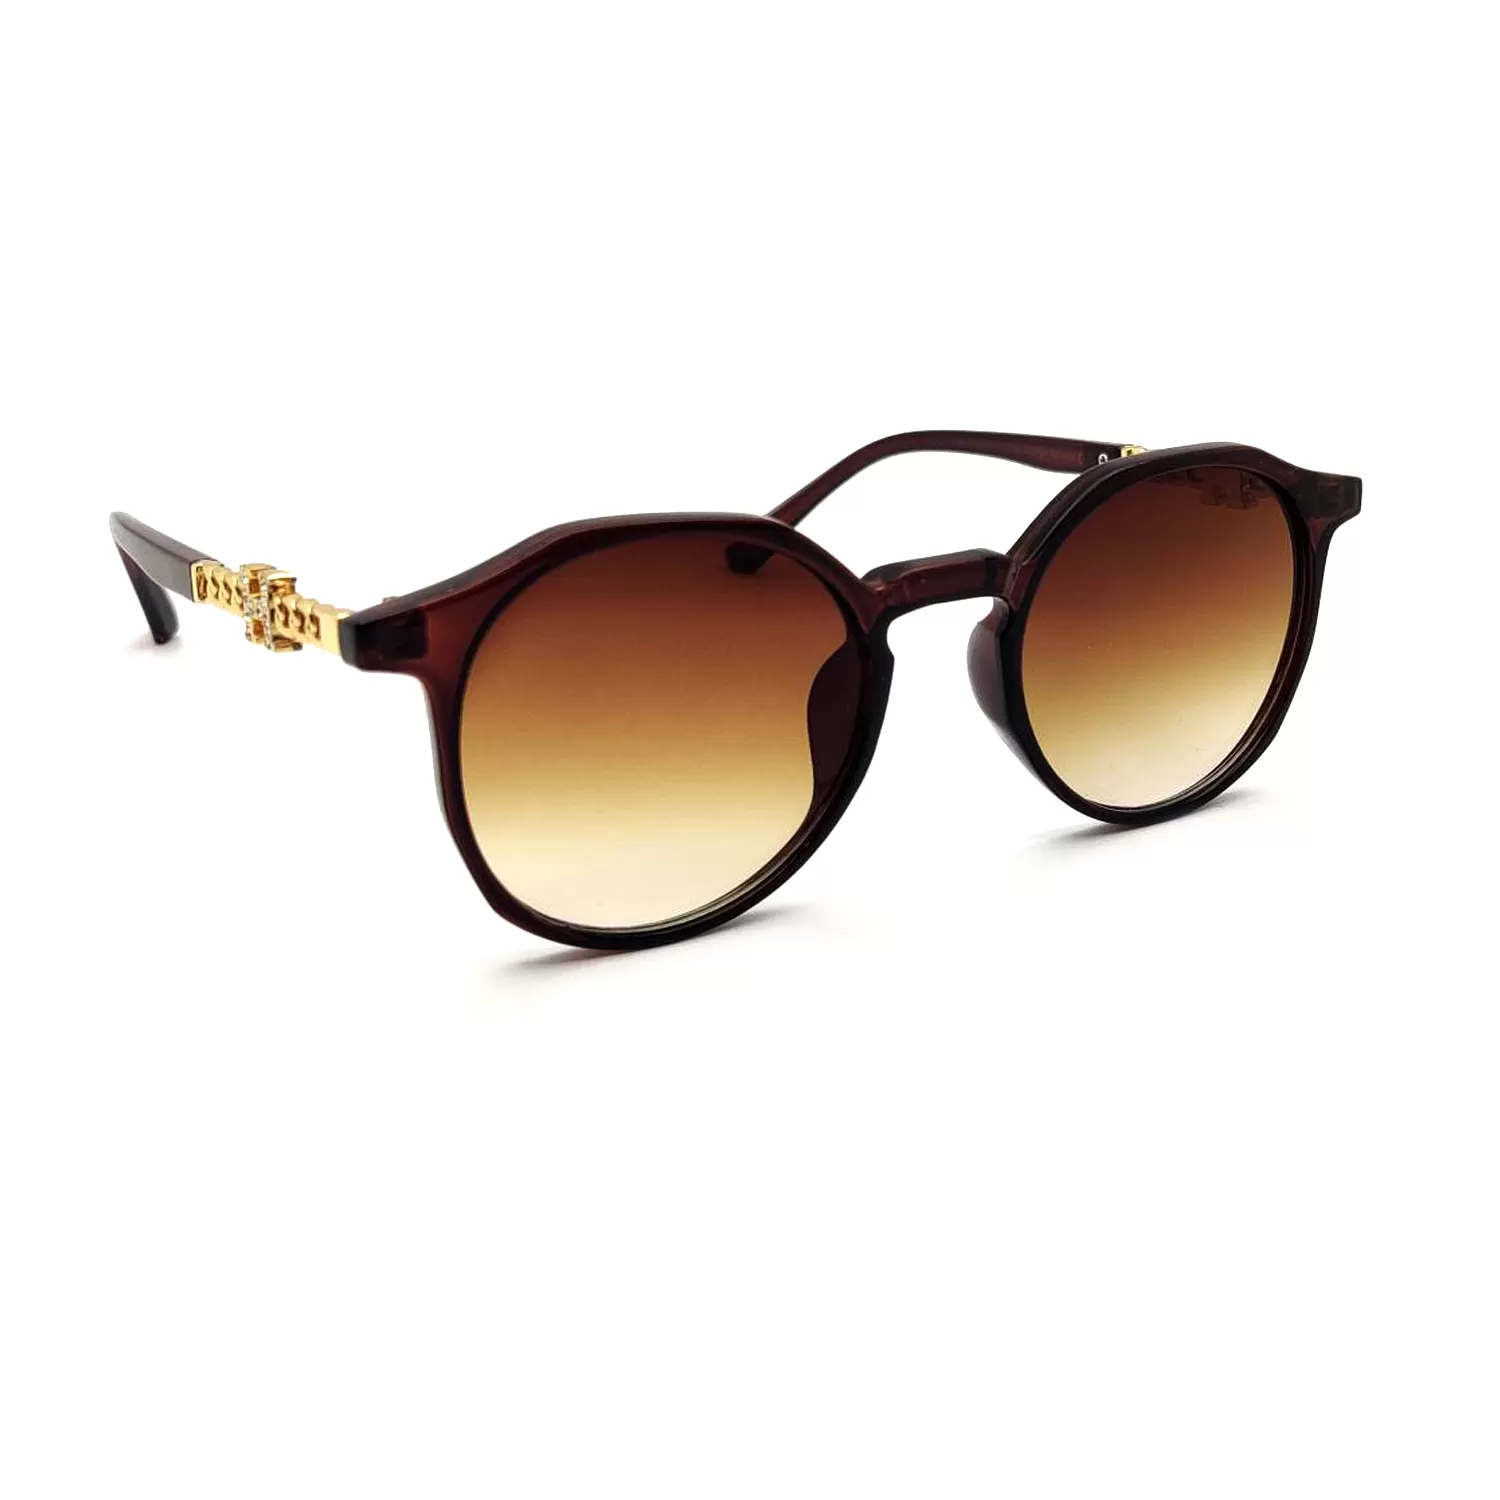 buy designer sunglasses online at chashmah.com